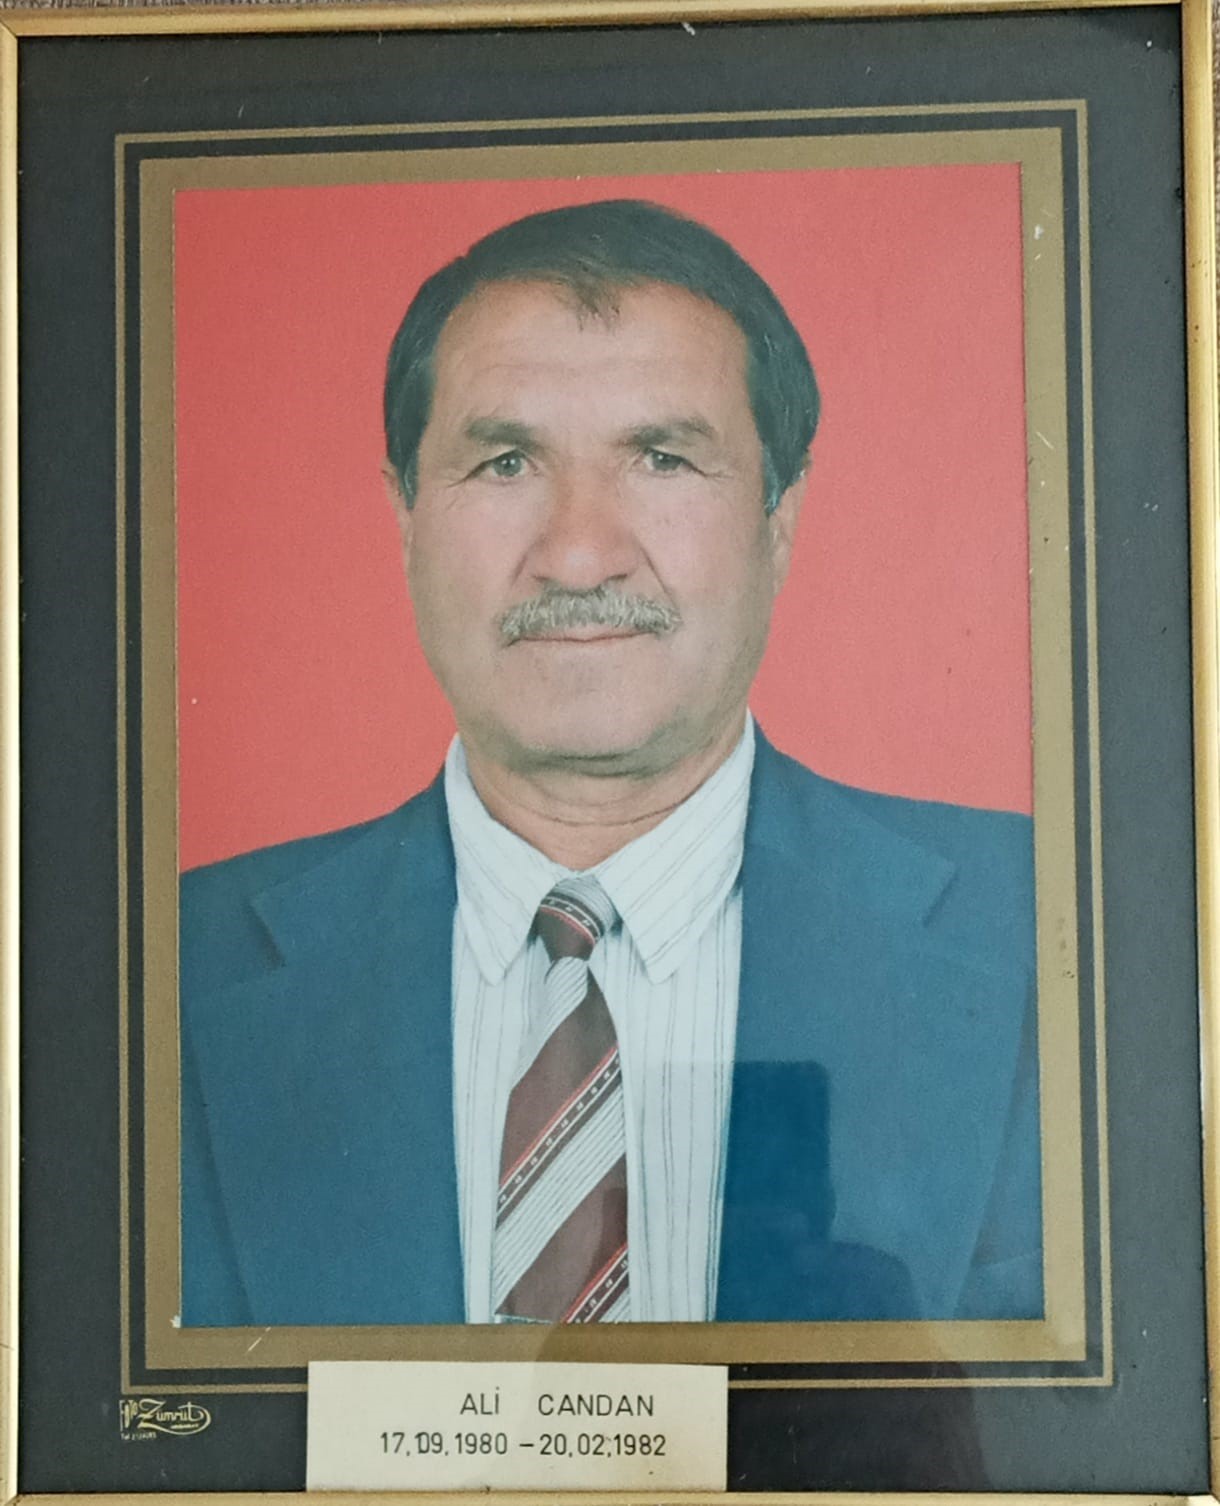 Ali CANDAN (17.09.1980 — 20.02.1982)